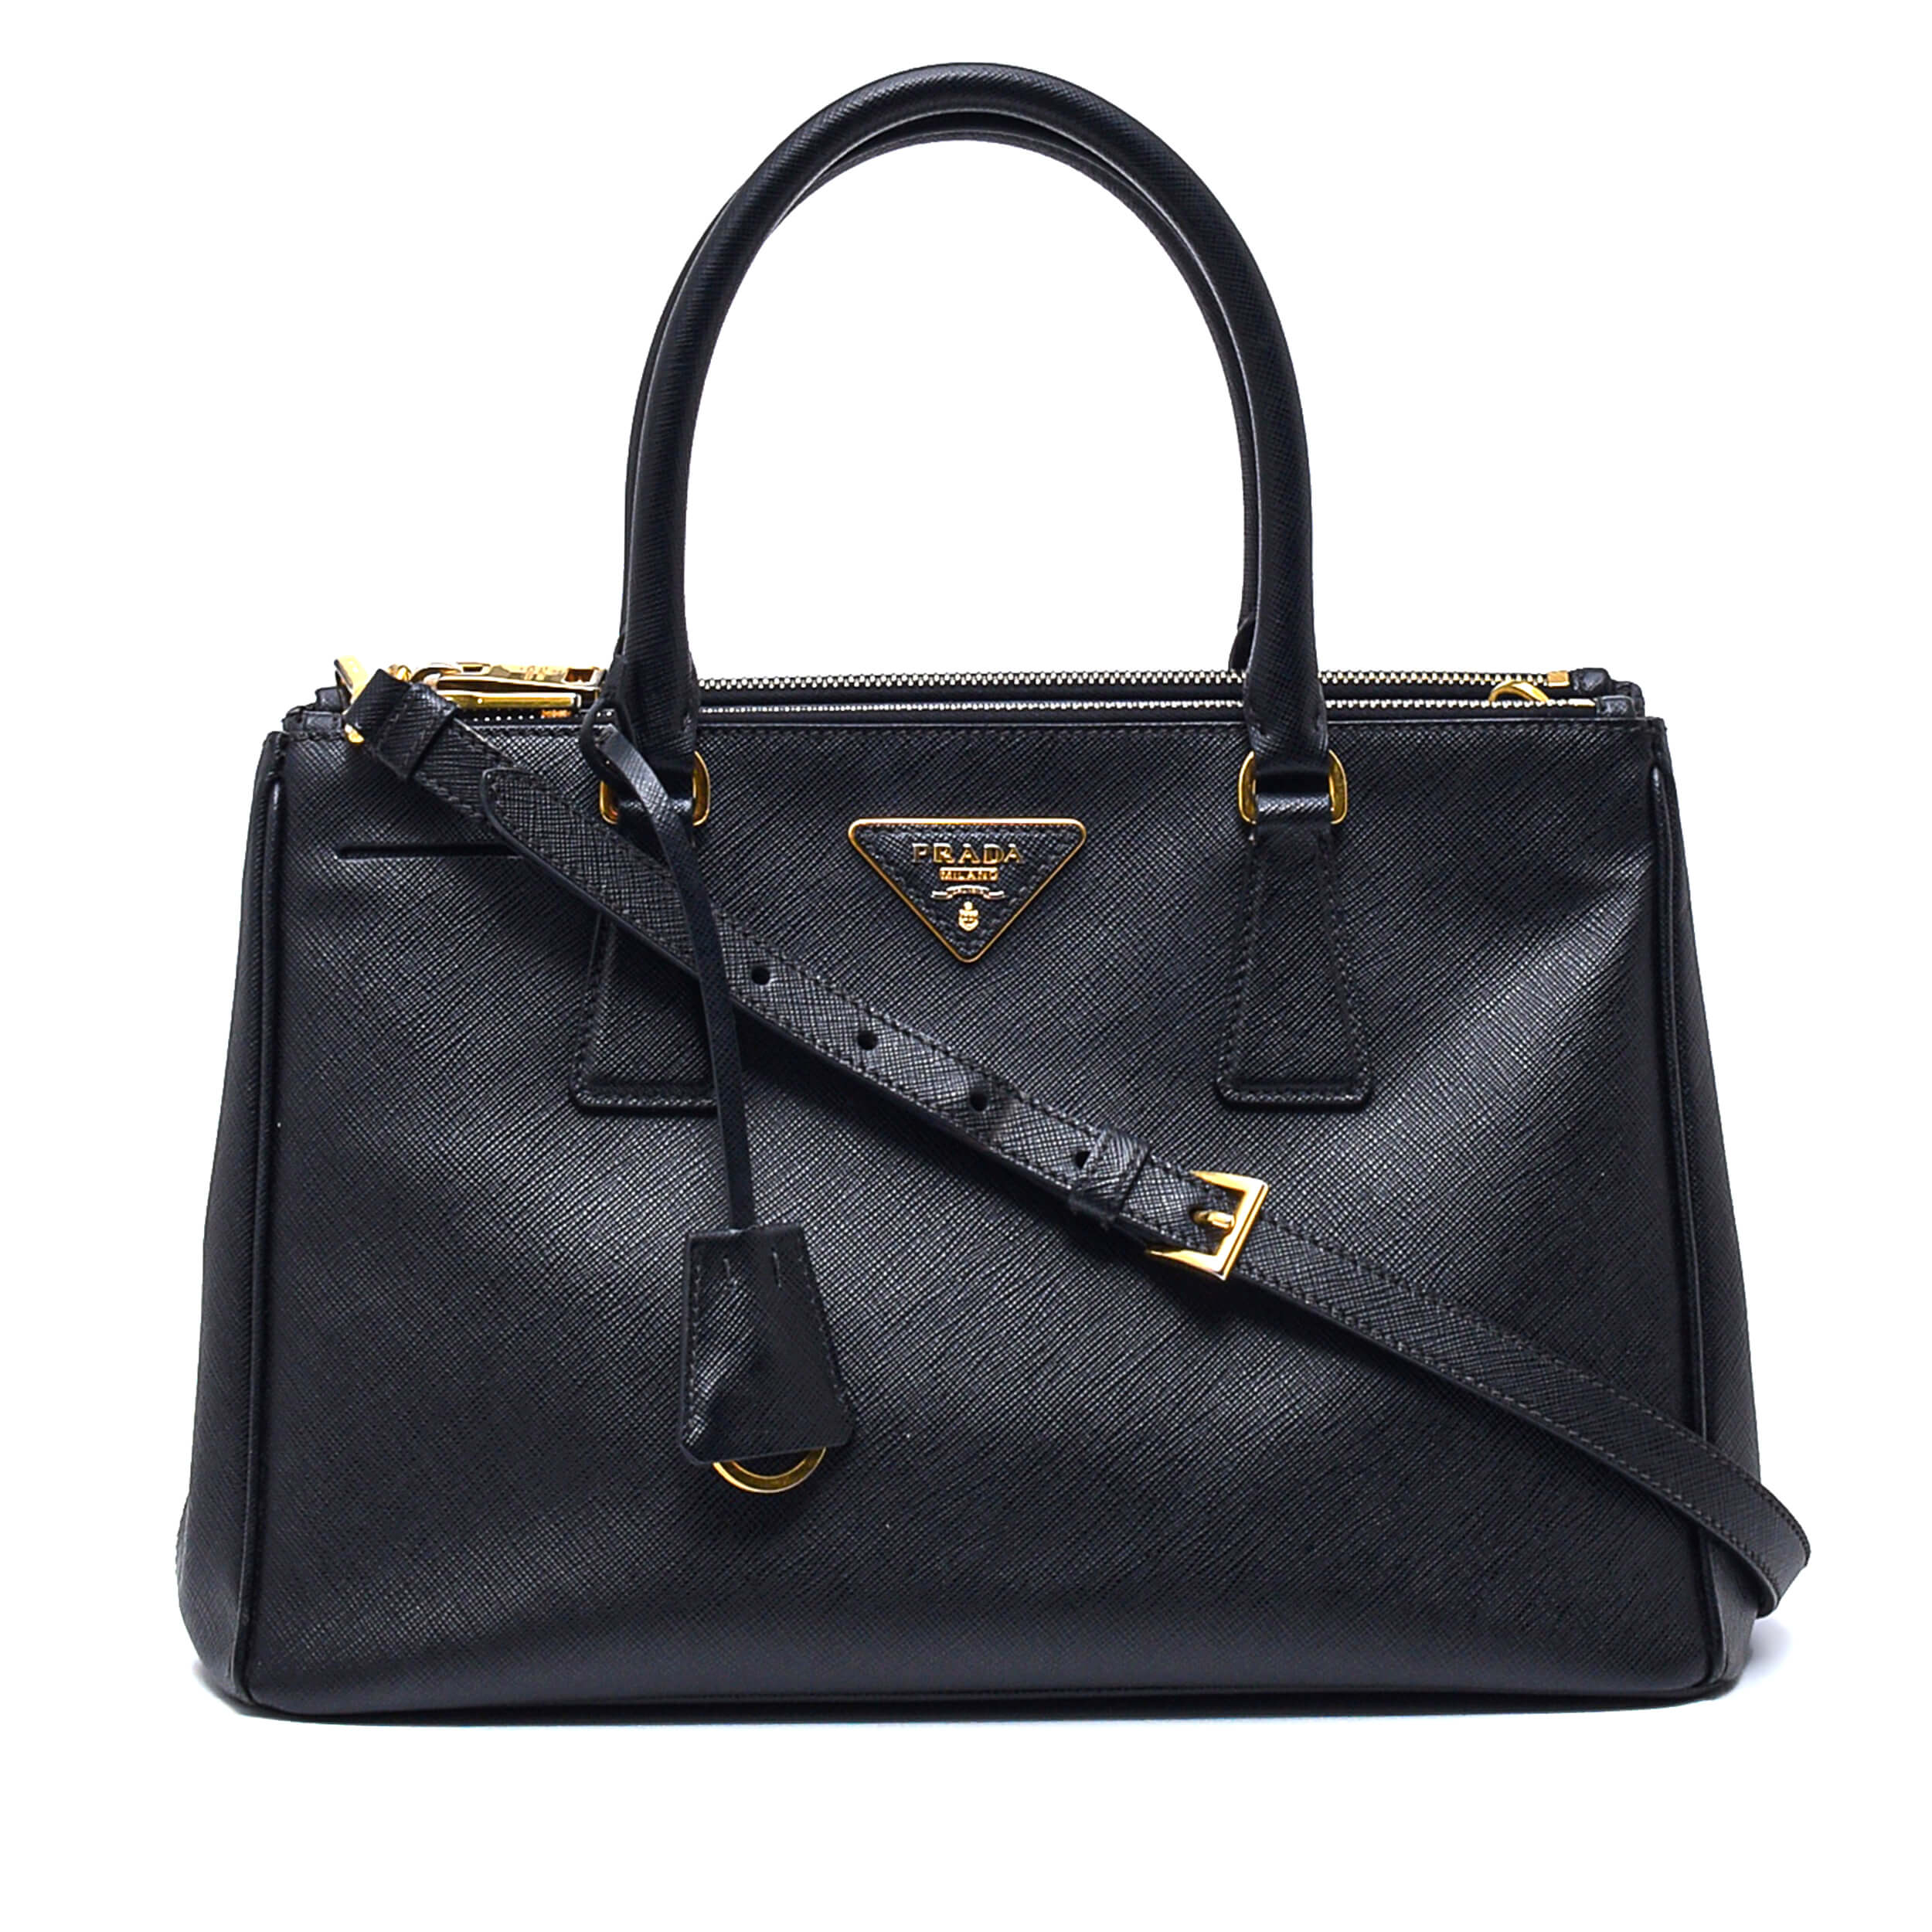 Prada - Black Saffiano Leather Double Zip Small Bag